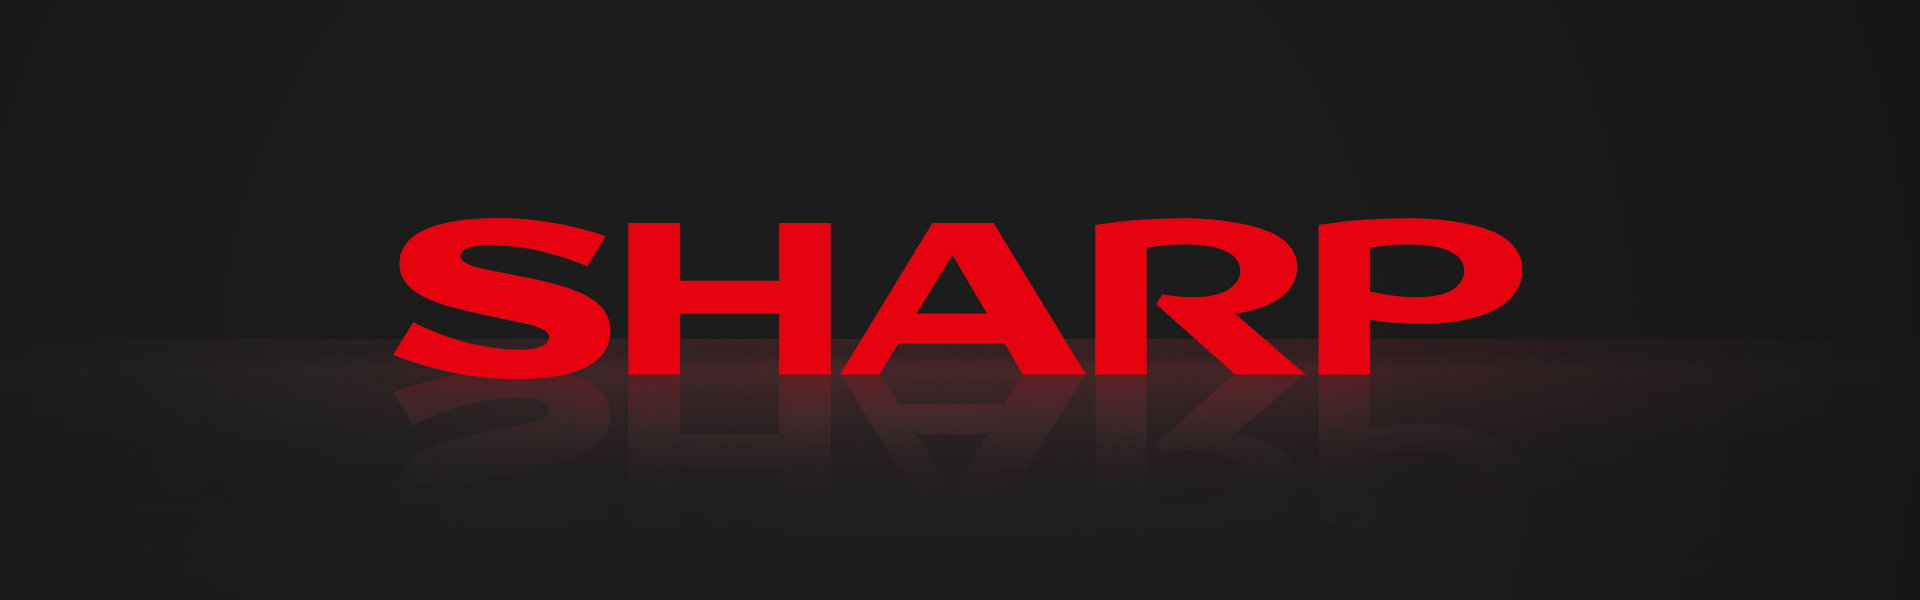 Sharp HT-SB140 2.0 Slim 